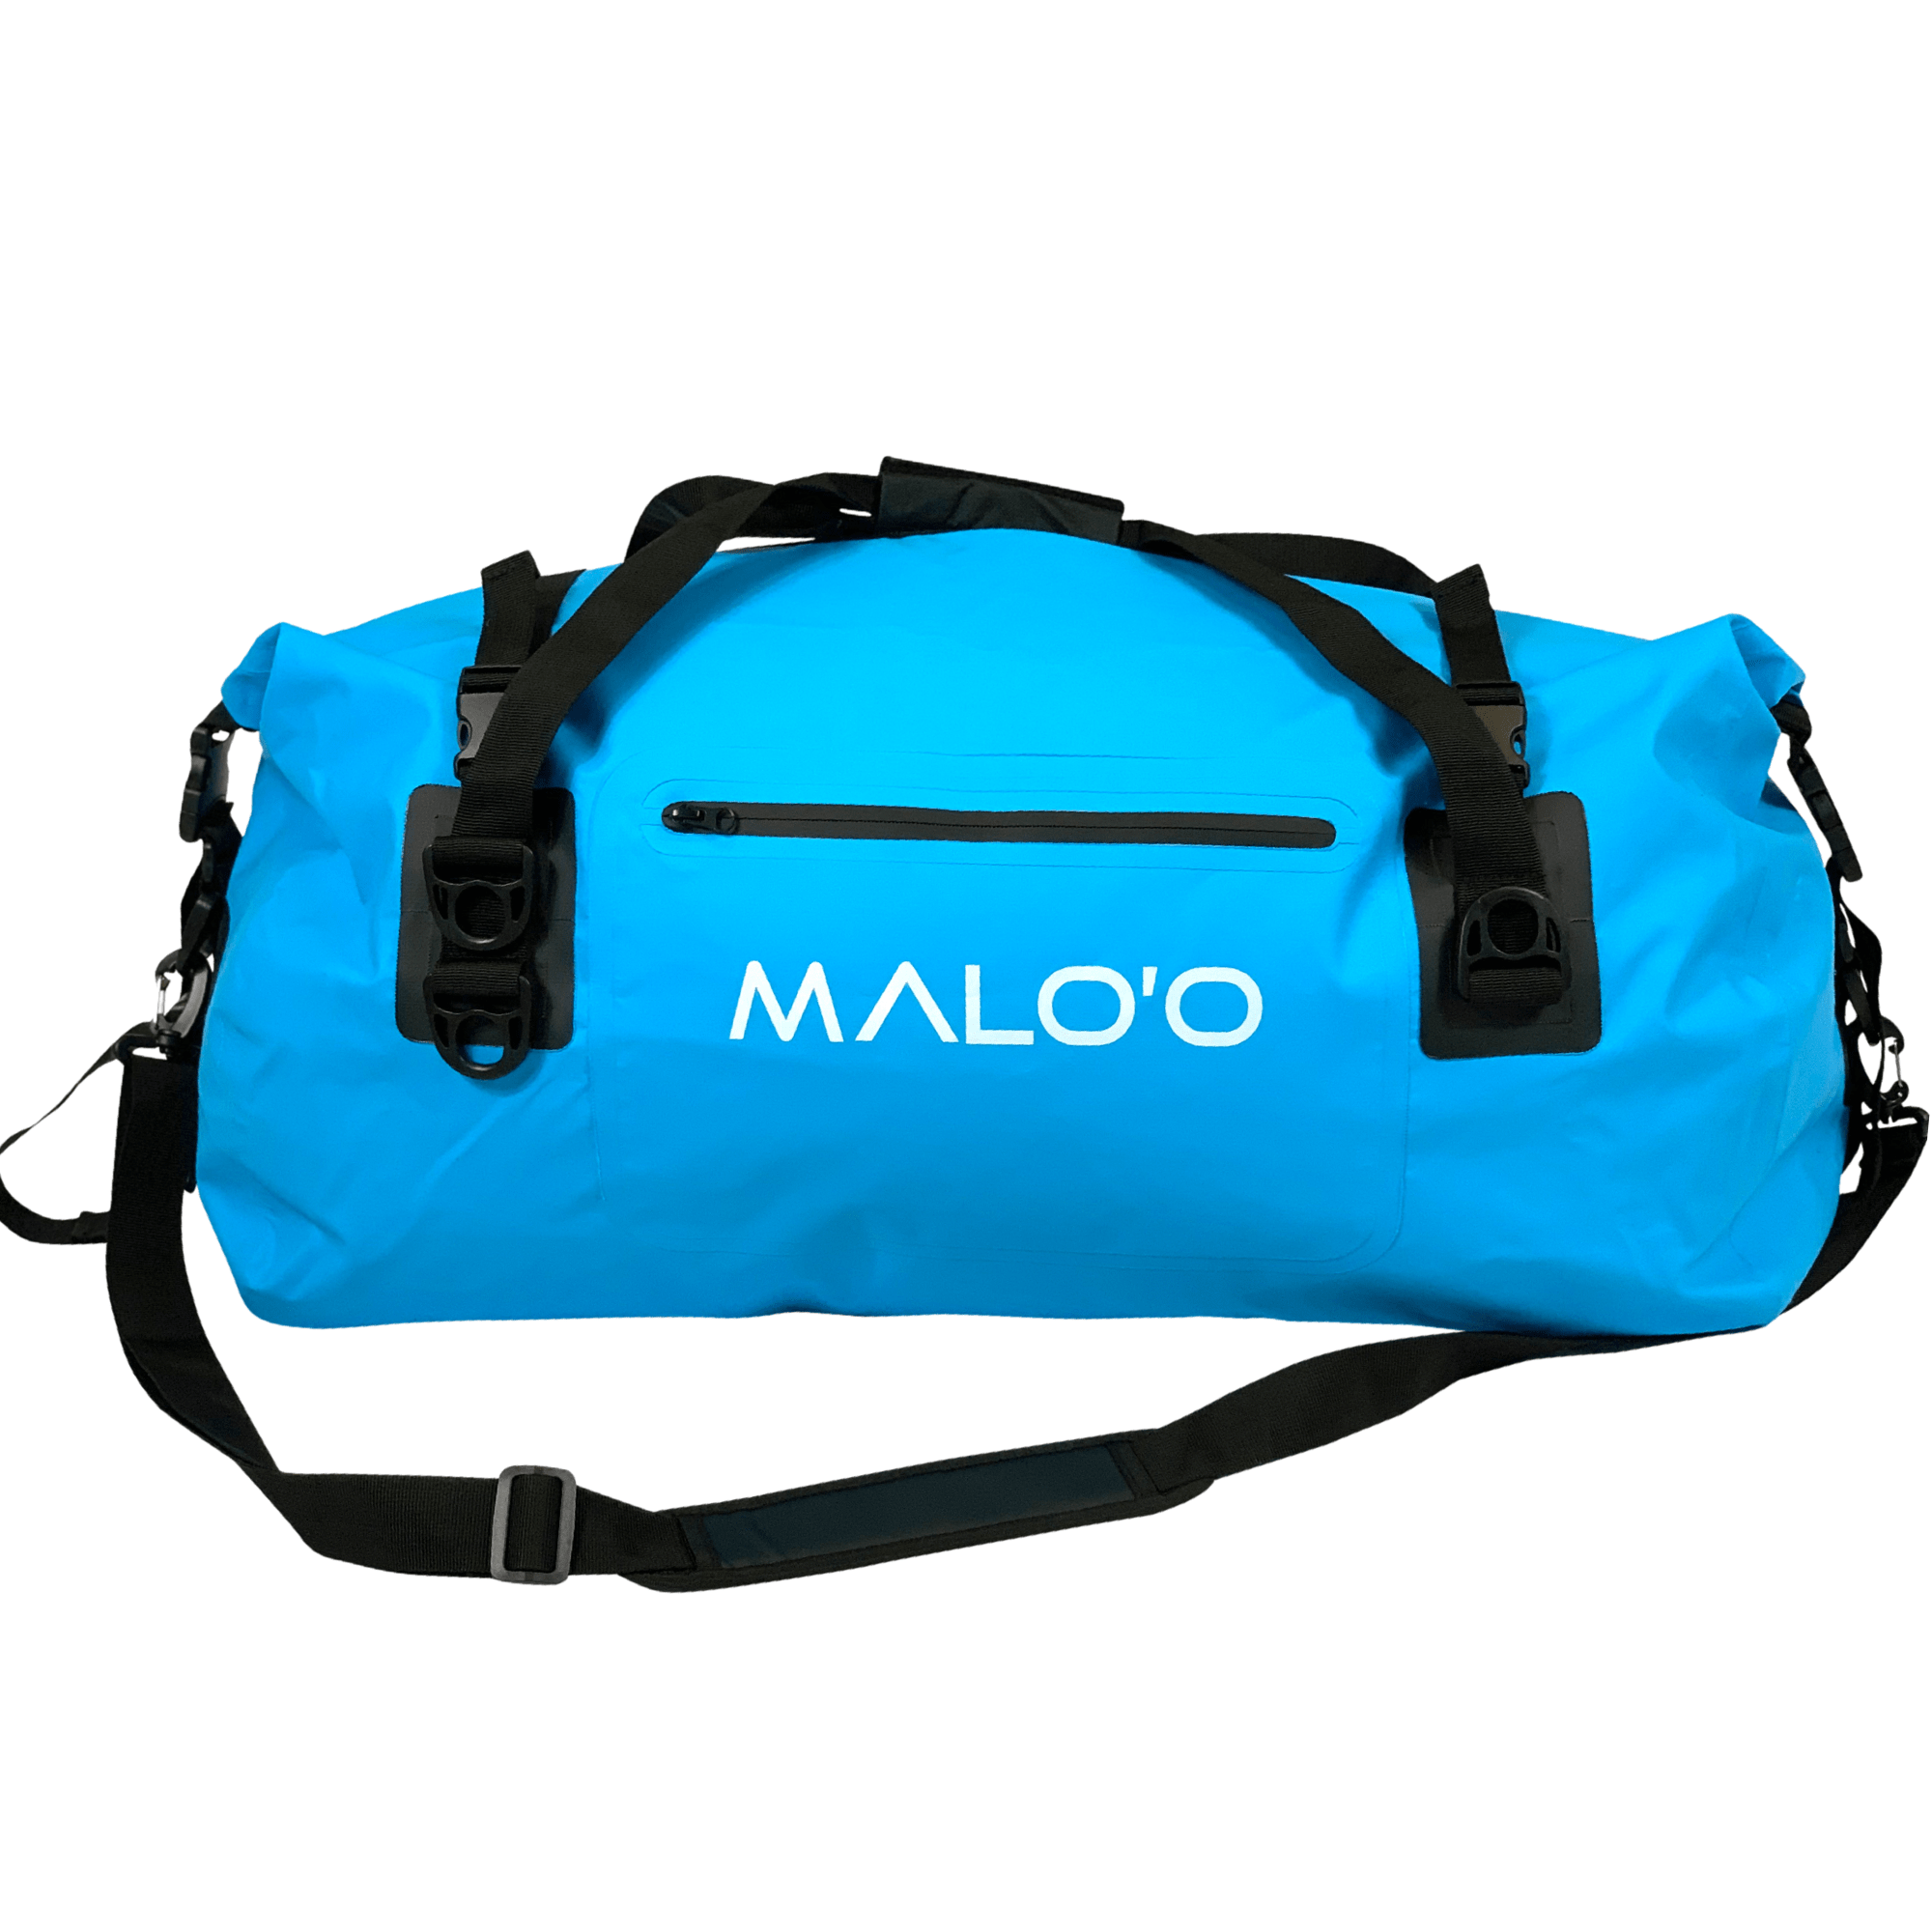 Malo'o Racks DryPack Blue / X-Large - 60 Liter MALO’O DRYPACK WATERPROOF ROLL-TOP DUFFLE BAG